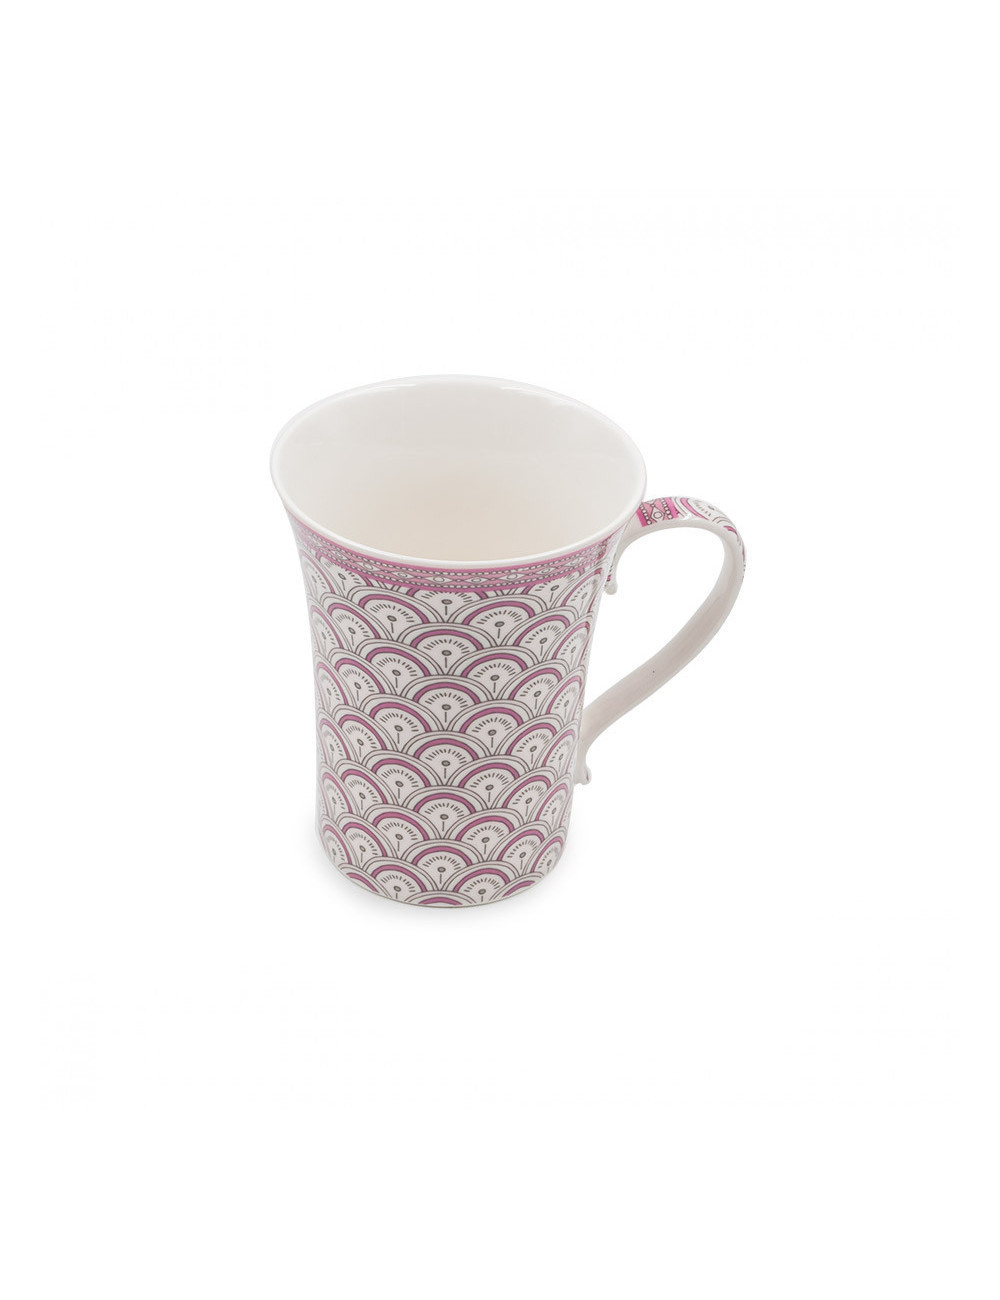 Elegante mug Season in porcellana con ventagli rosa - La Pianta del Tè shop on line